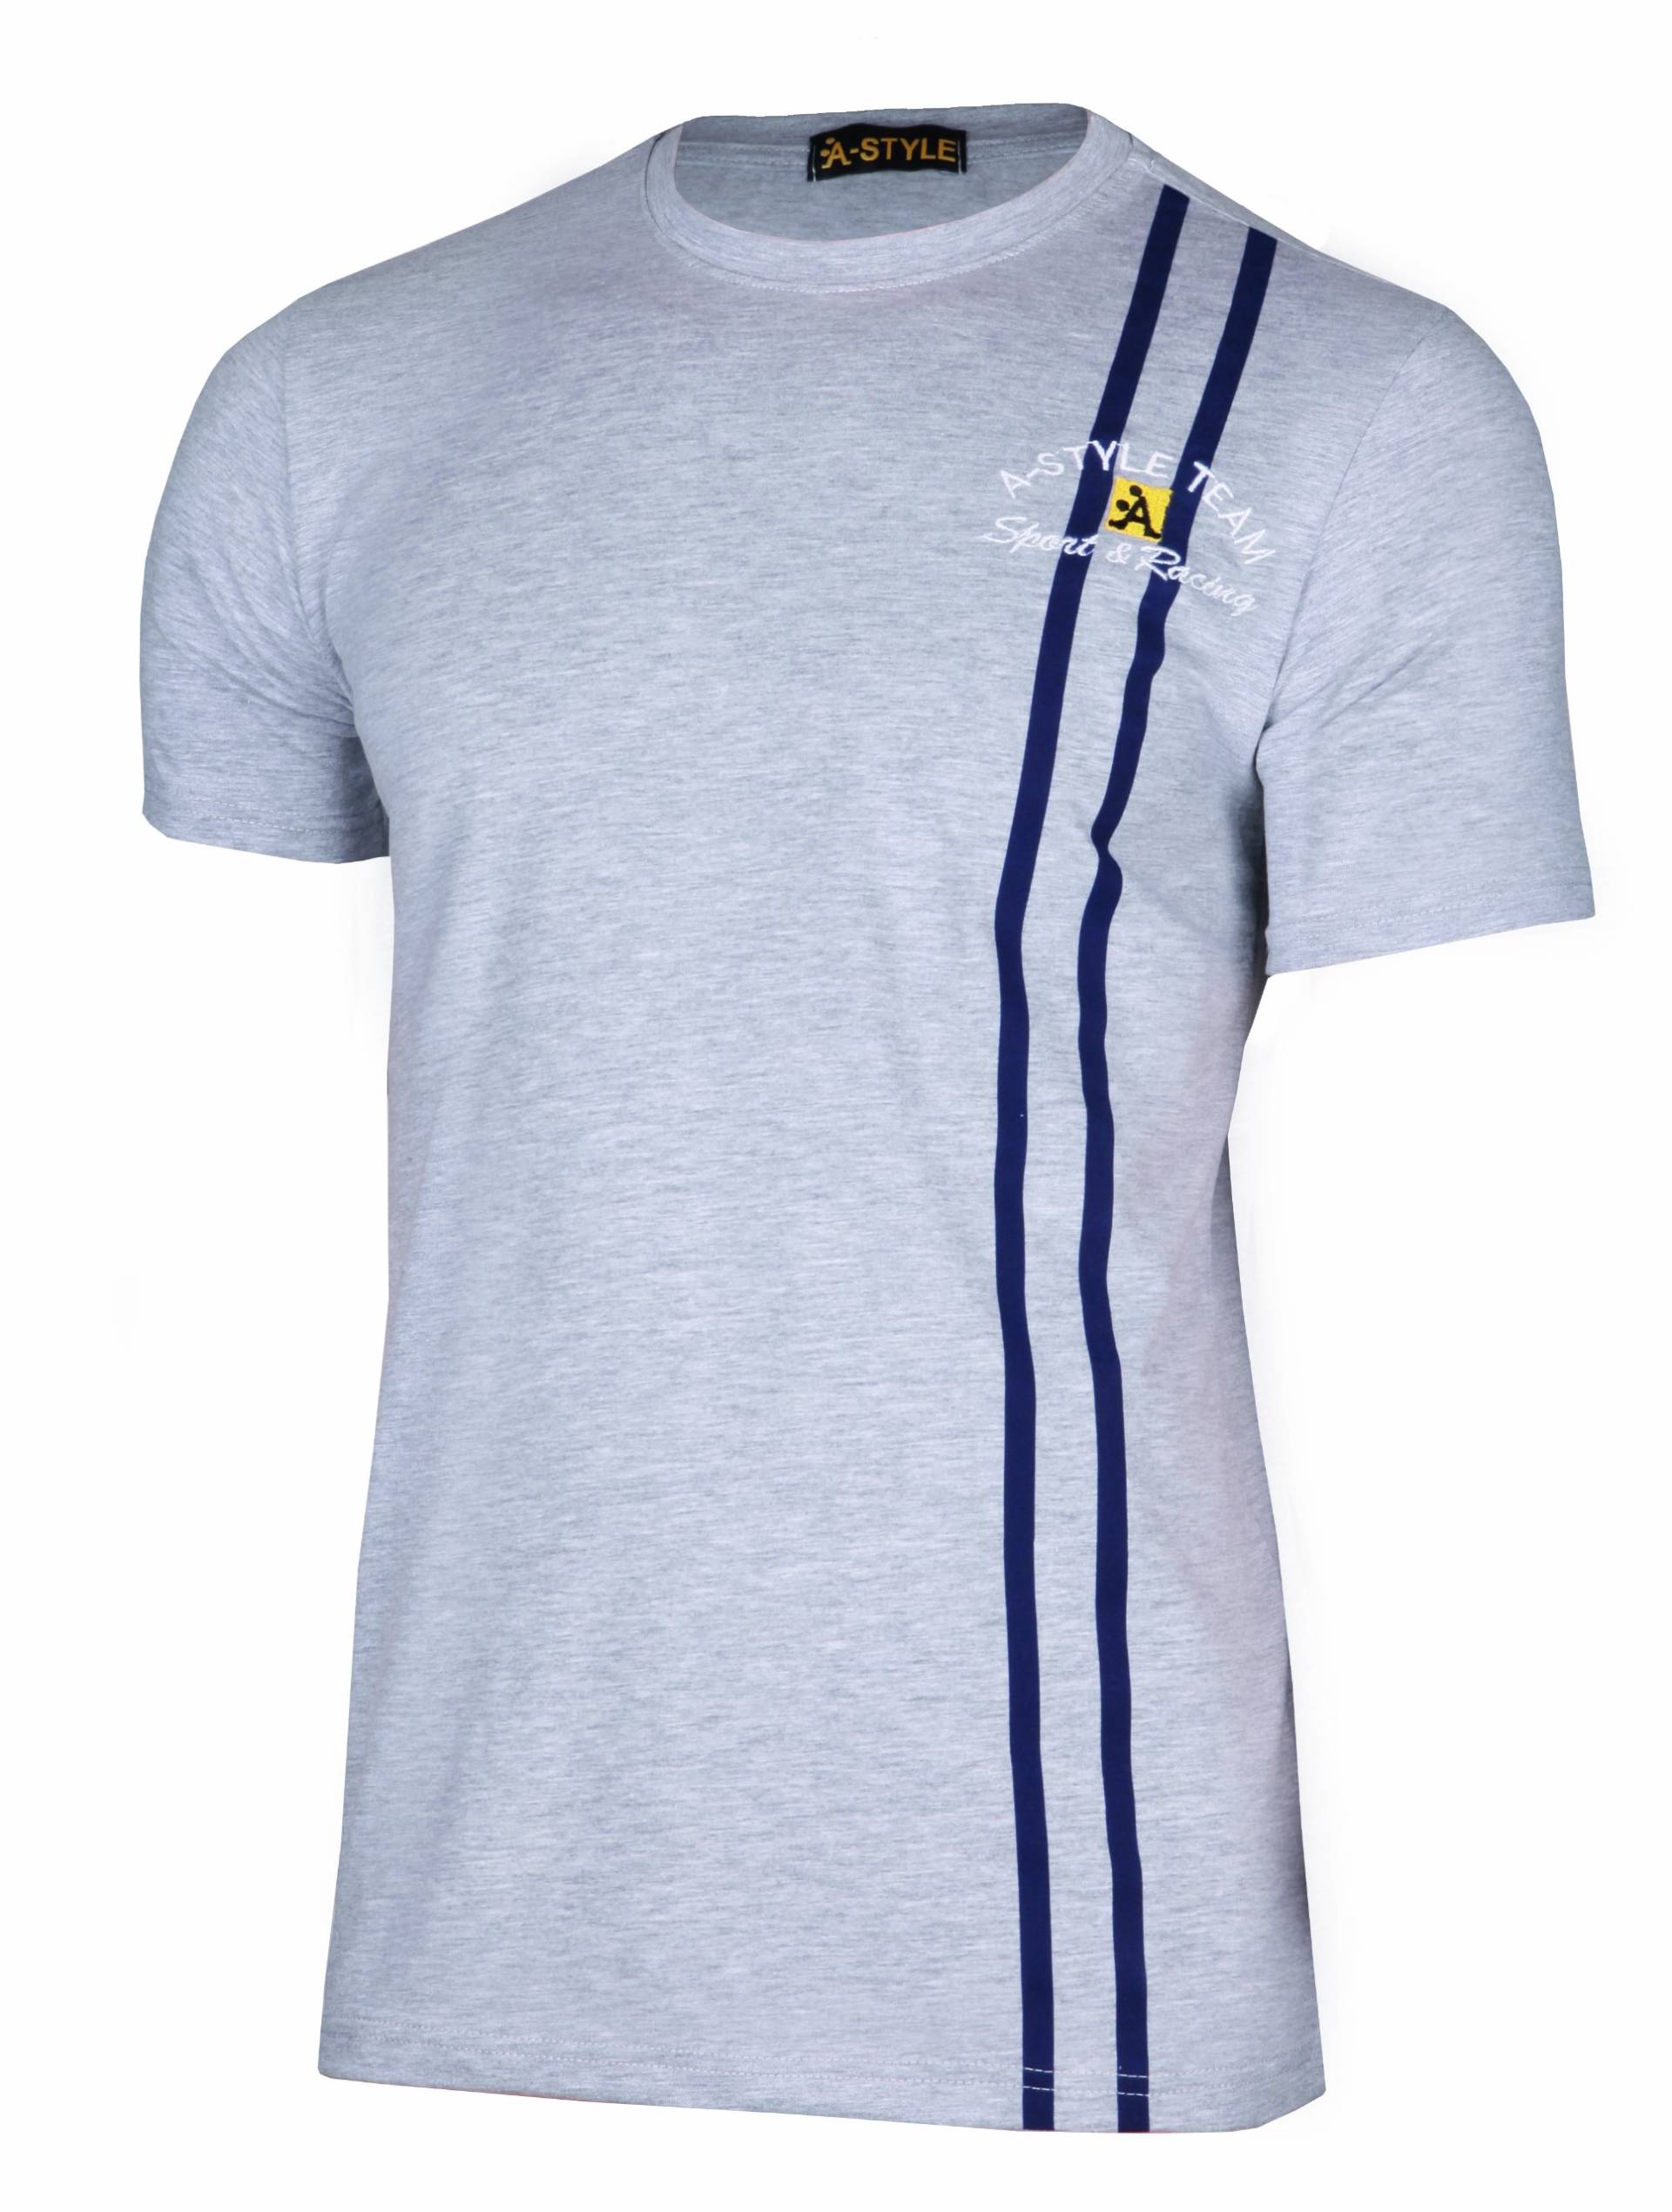 A-Style T-Shirt Stripes, Grau, M von A-Style